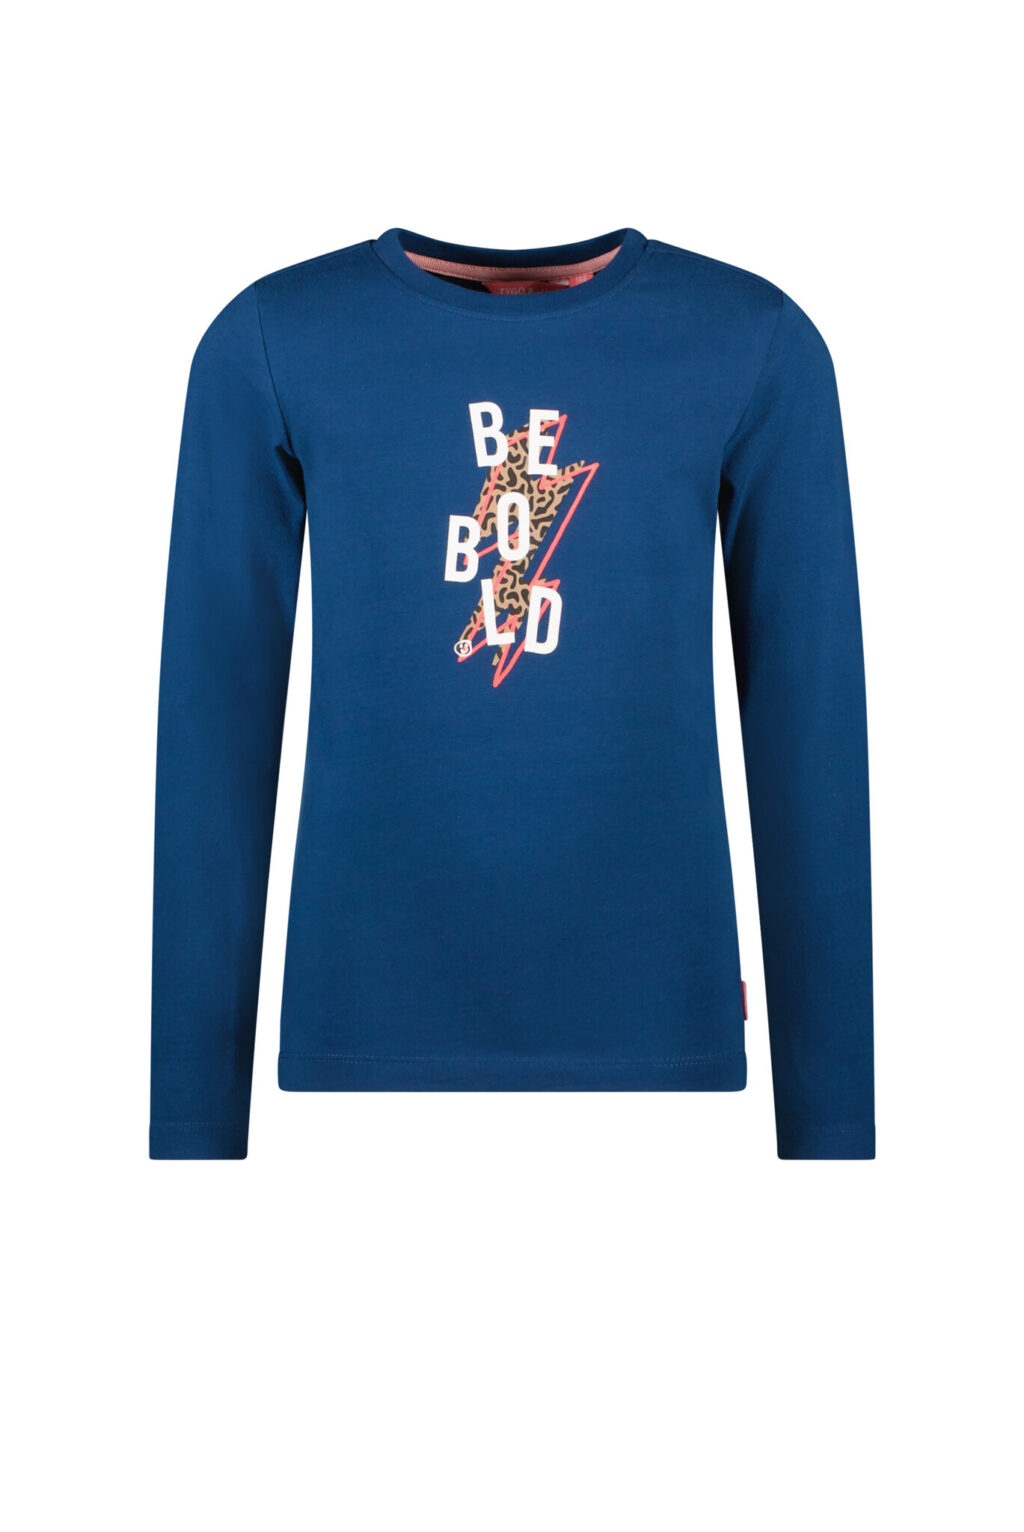 Tygo & Vito Meisjes shirt - Linde - Sporty blauw ~ Spinze.nl